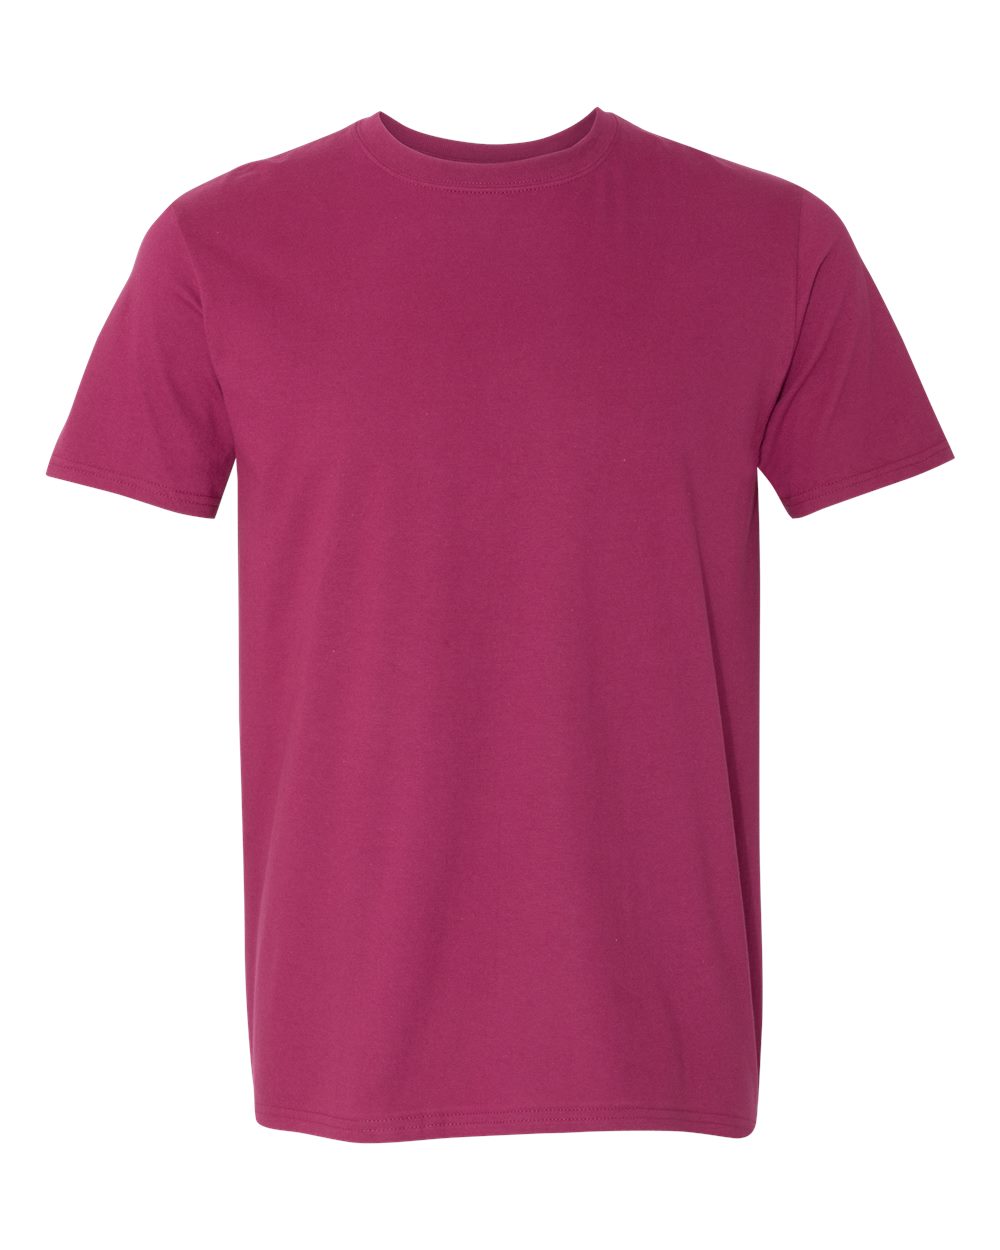 Gildan 64000 - Men's SoftStyle T-Shirt $2.98 - T-Shirts